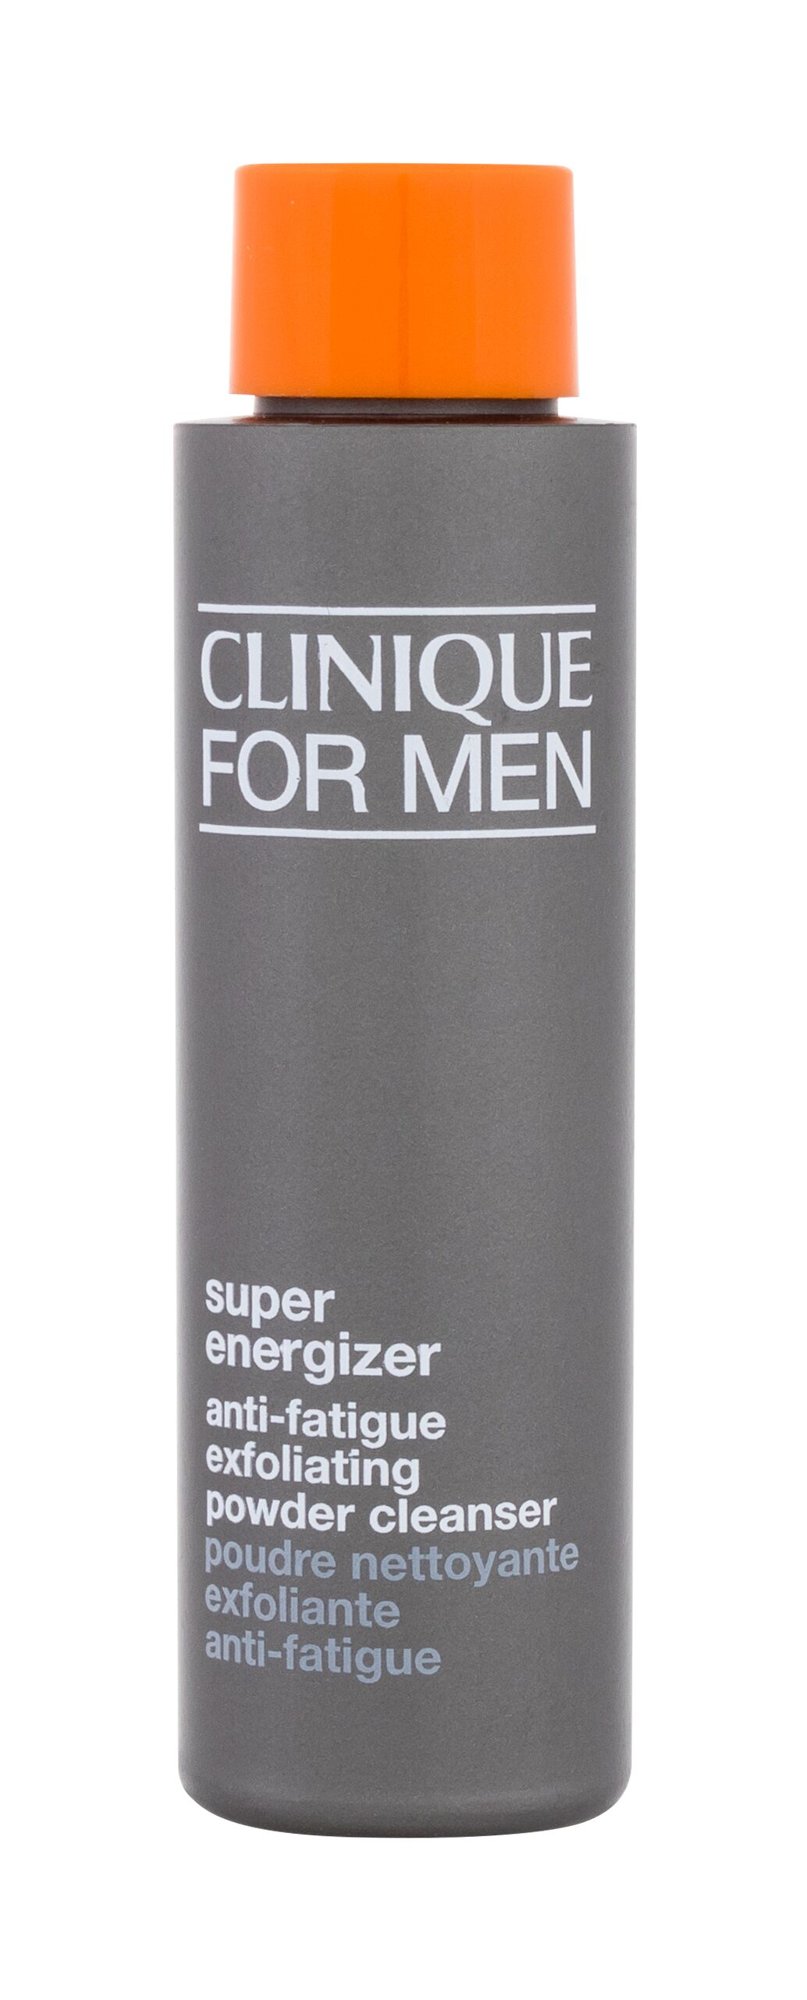 Clinique For Men Super Energizer Powder Cleanser veido kremas